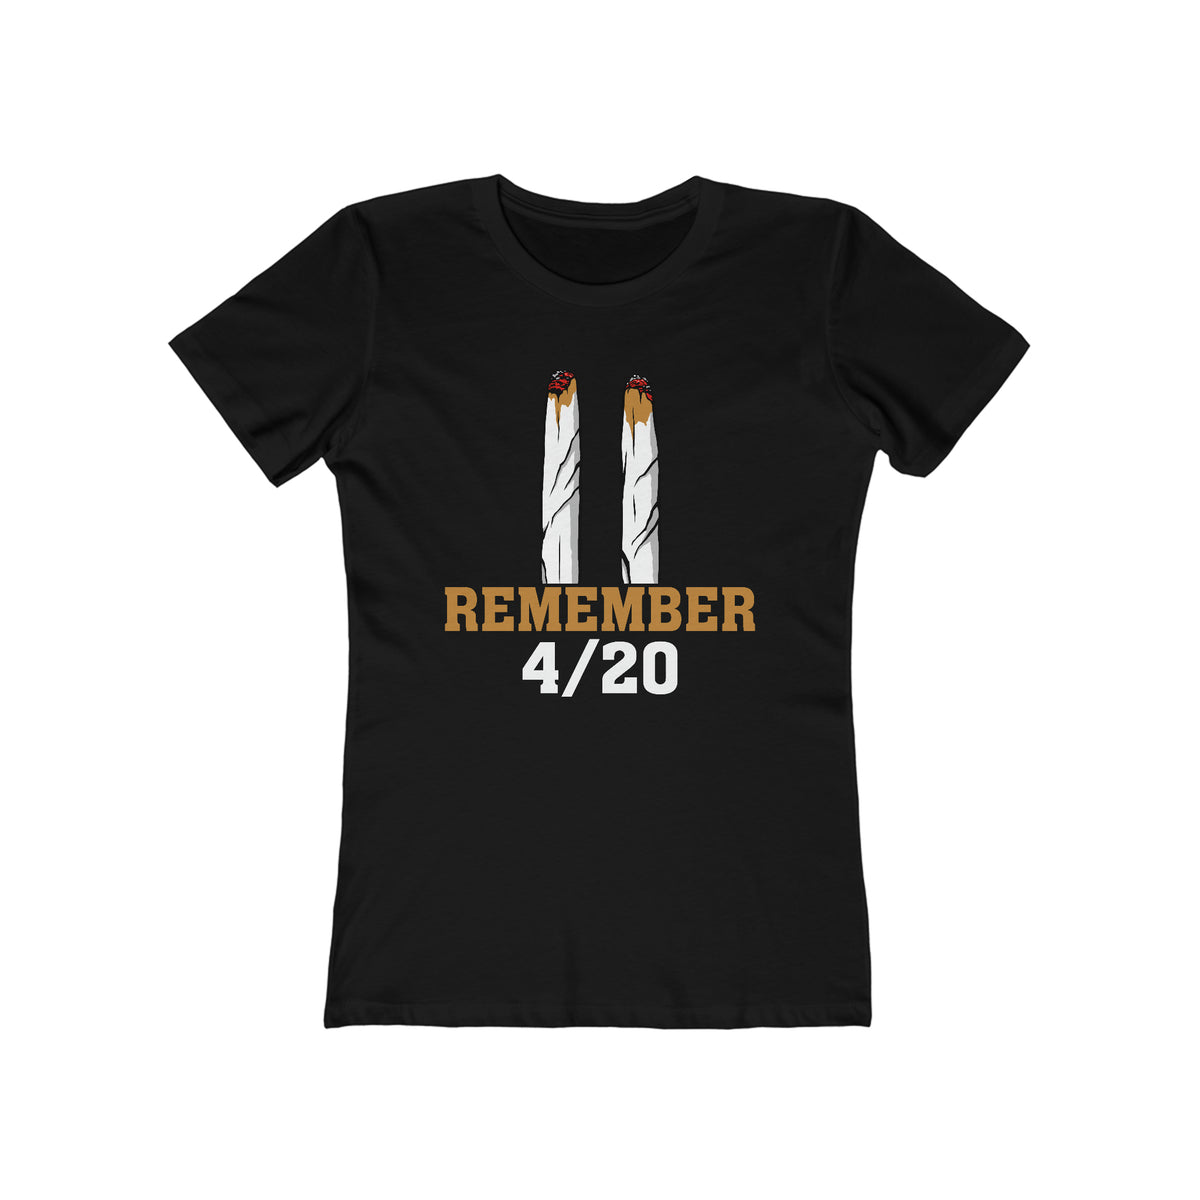 Remember 4/20 - Women’s T-Shirt